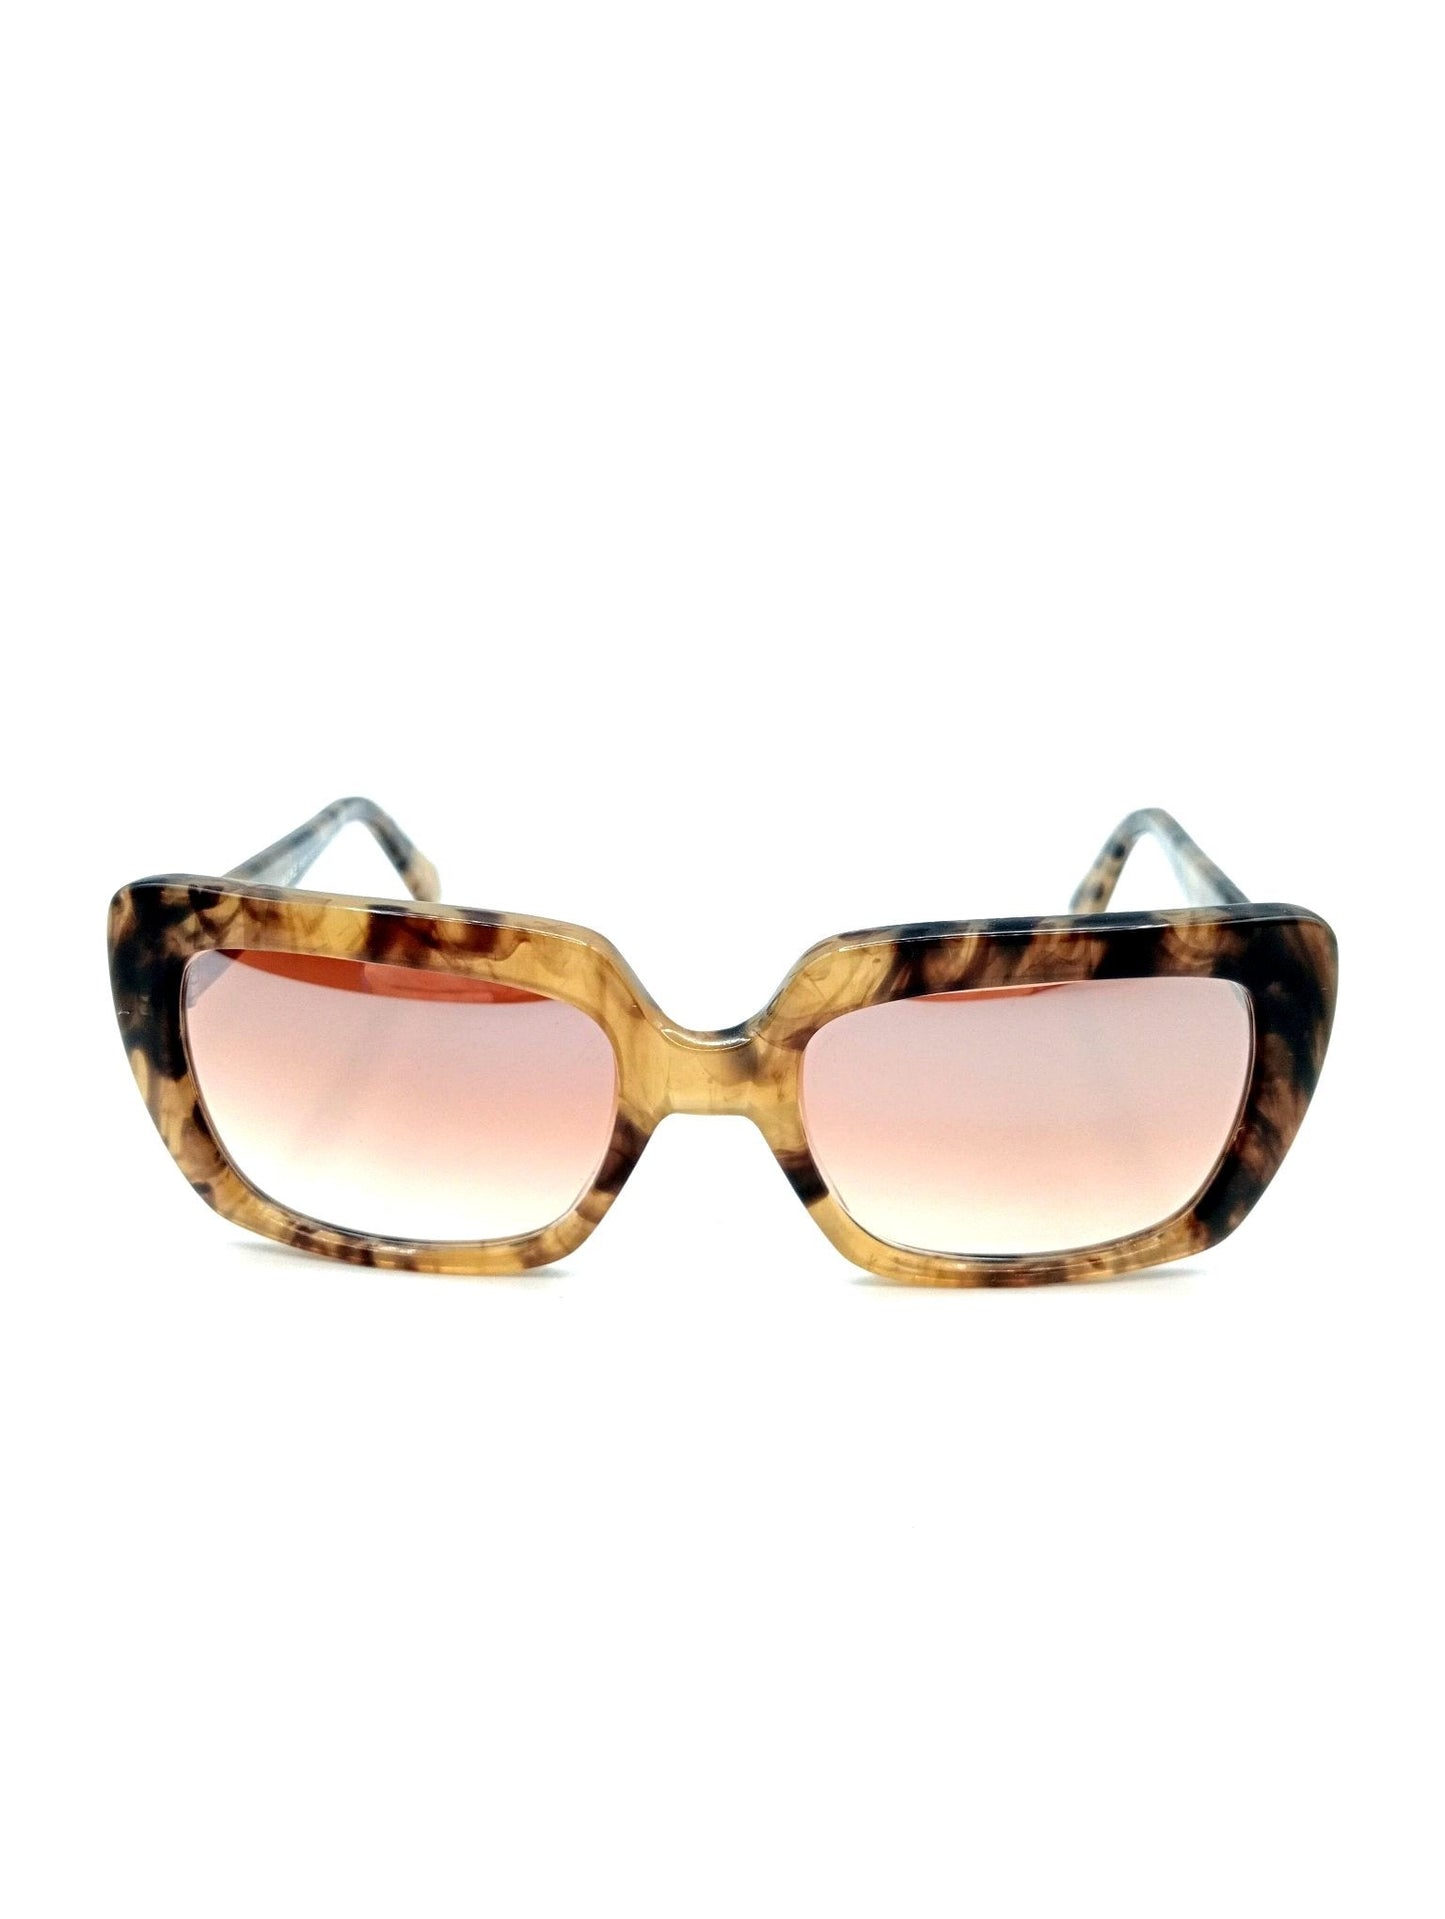 Vintage sunglasses for women Melanya made in Spain Qoolst